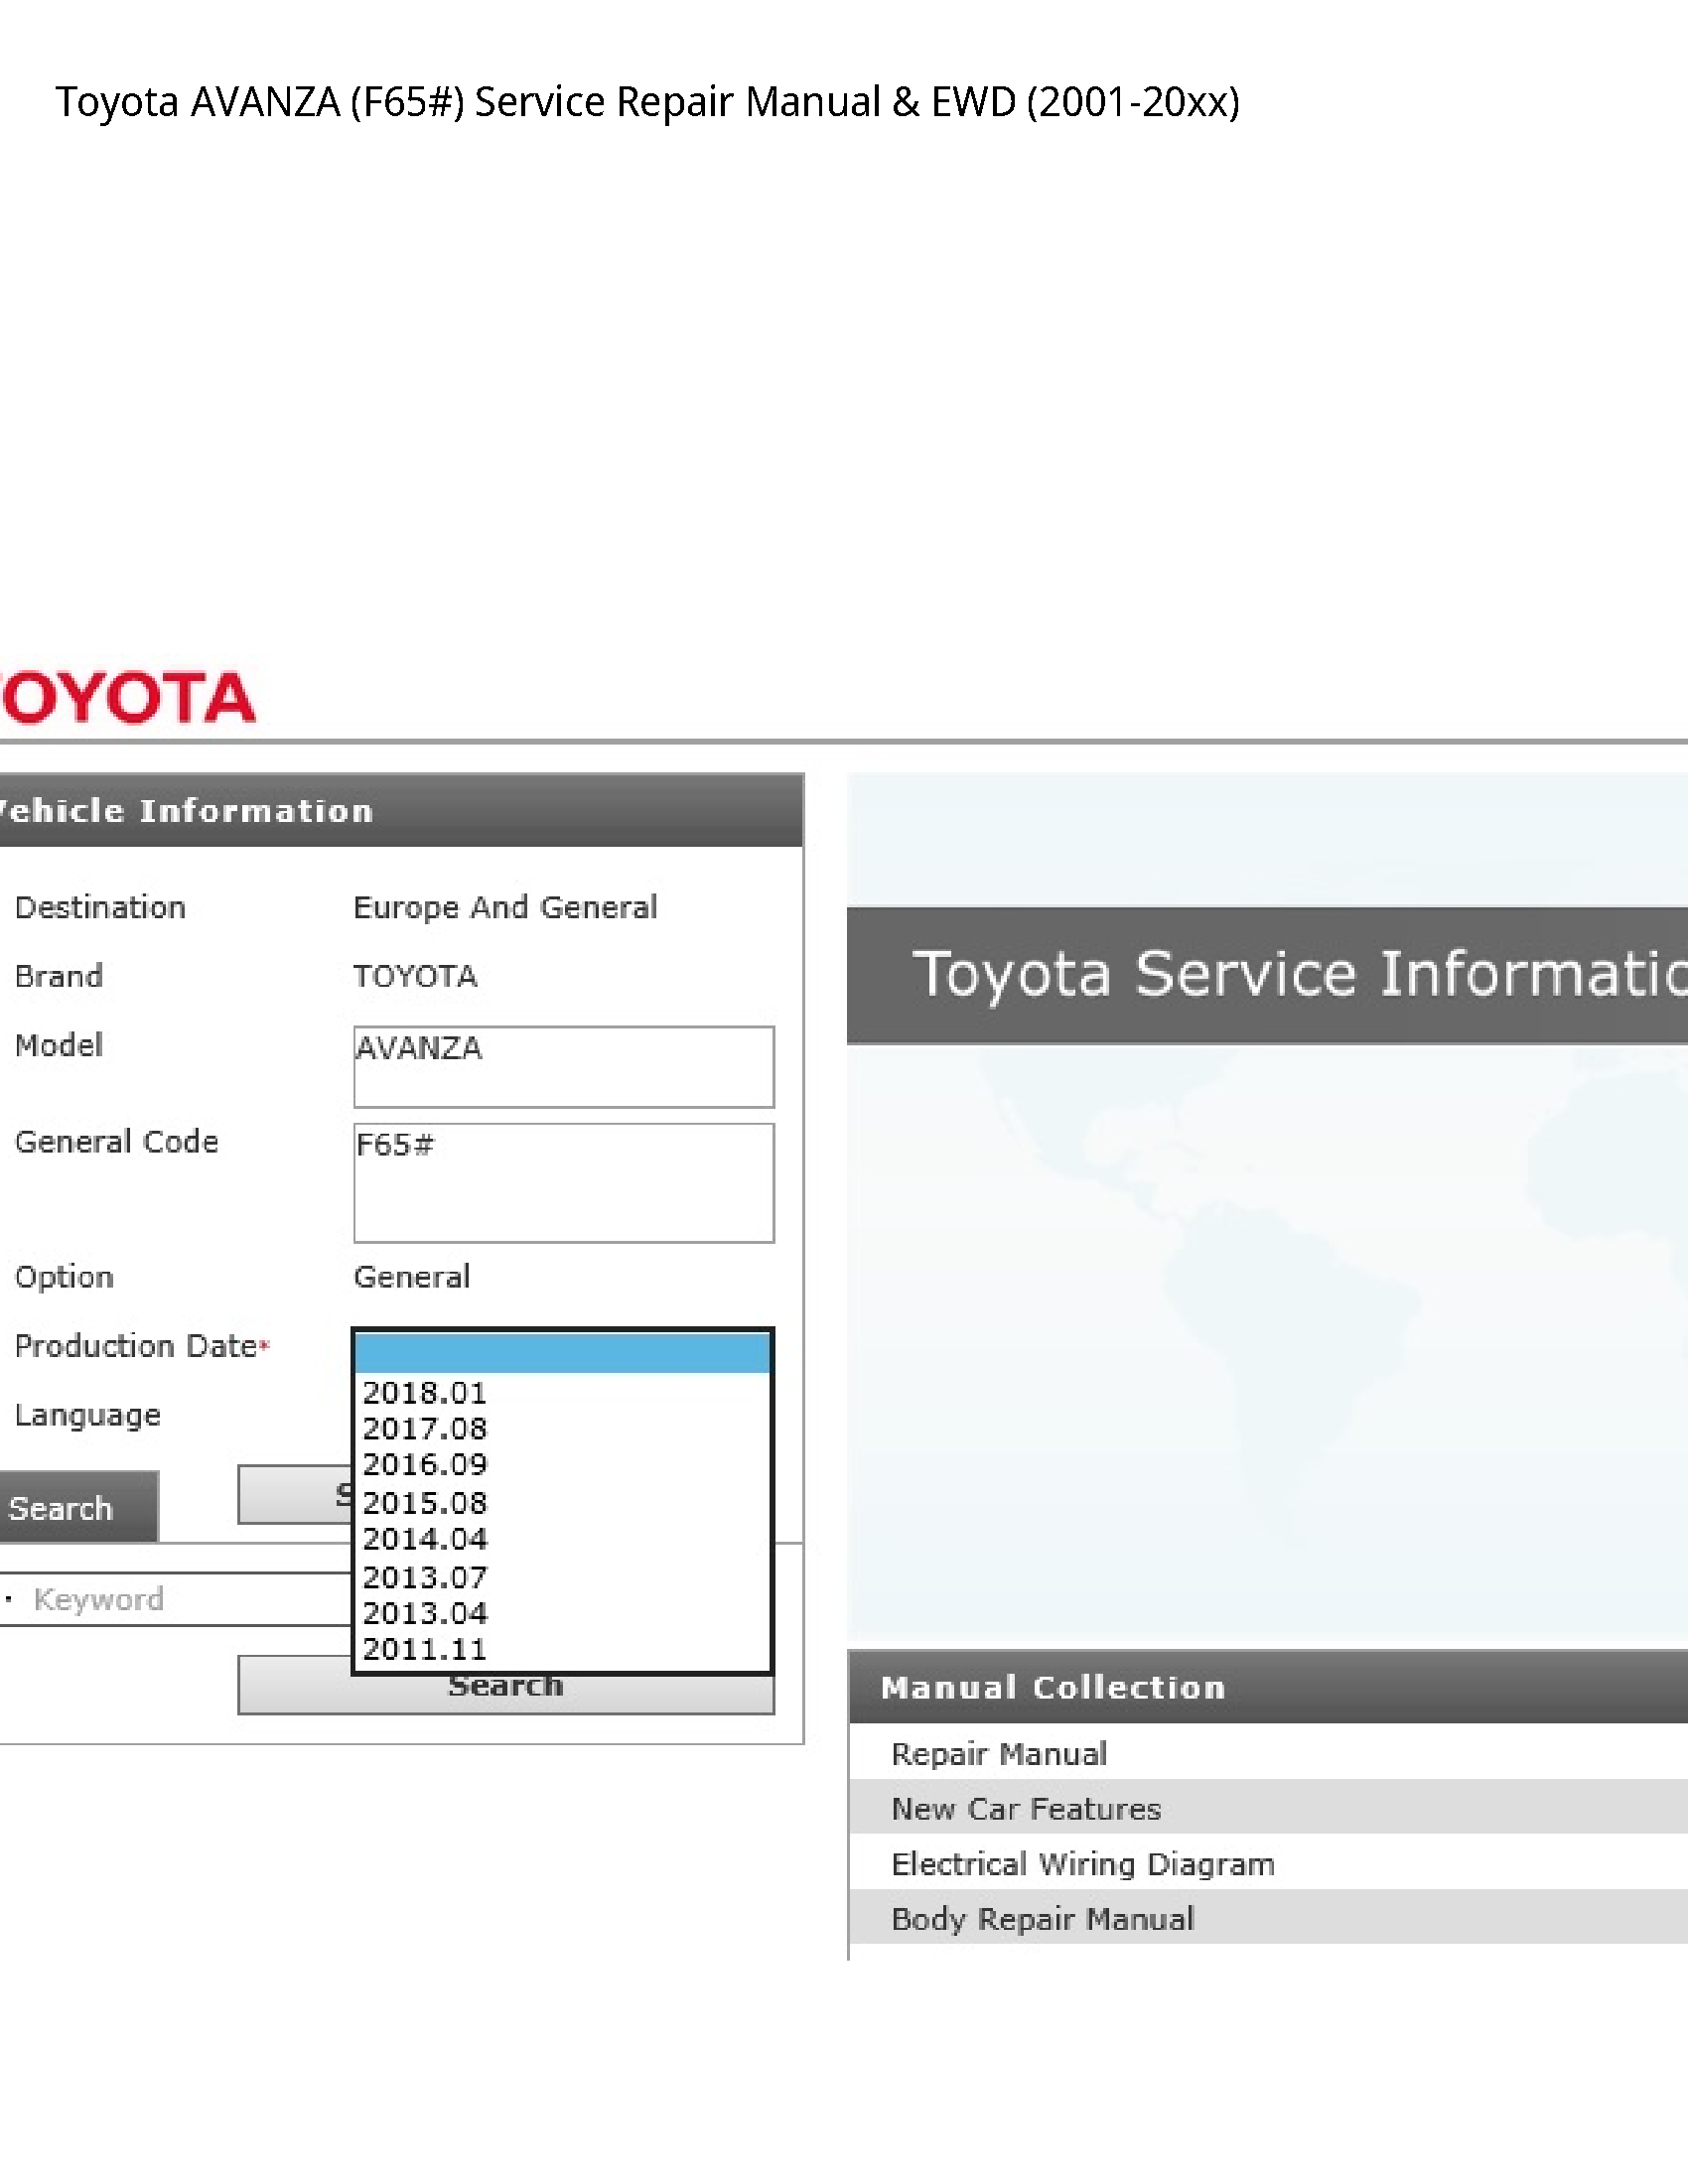 Toyota (F65#) AVANZA manual